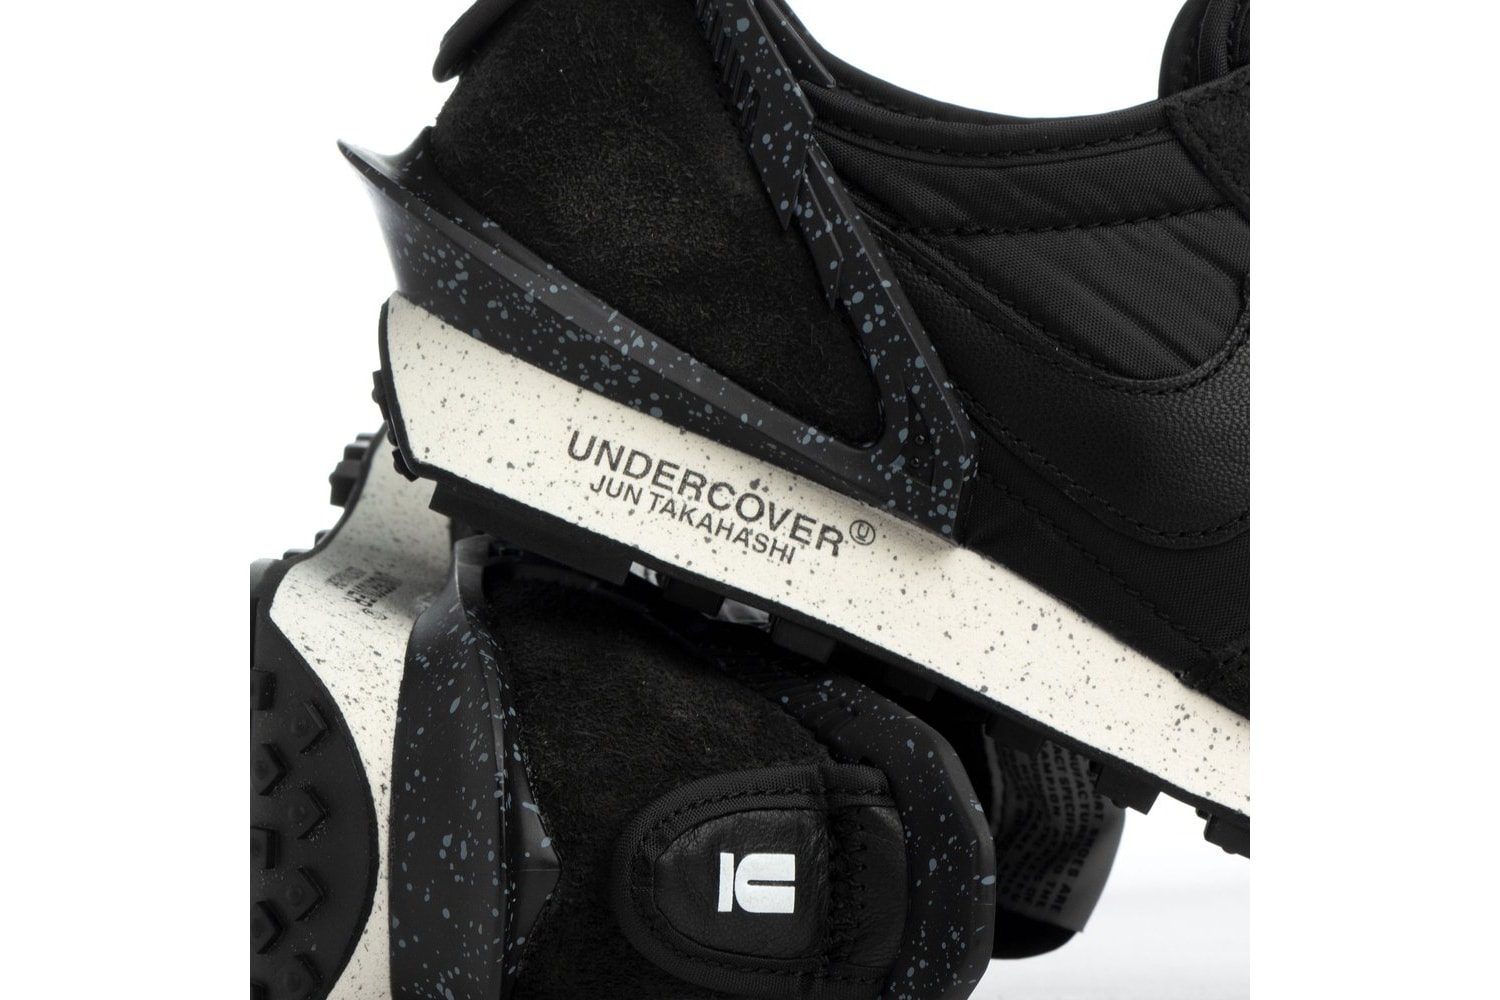 Nike UNDERCOVER daybreak nouveau vert noir photos sortie 